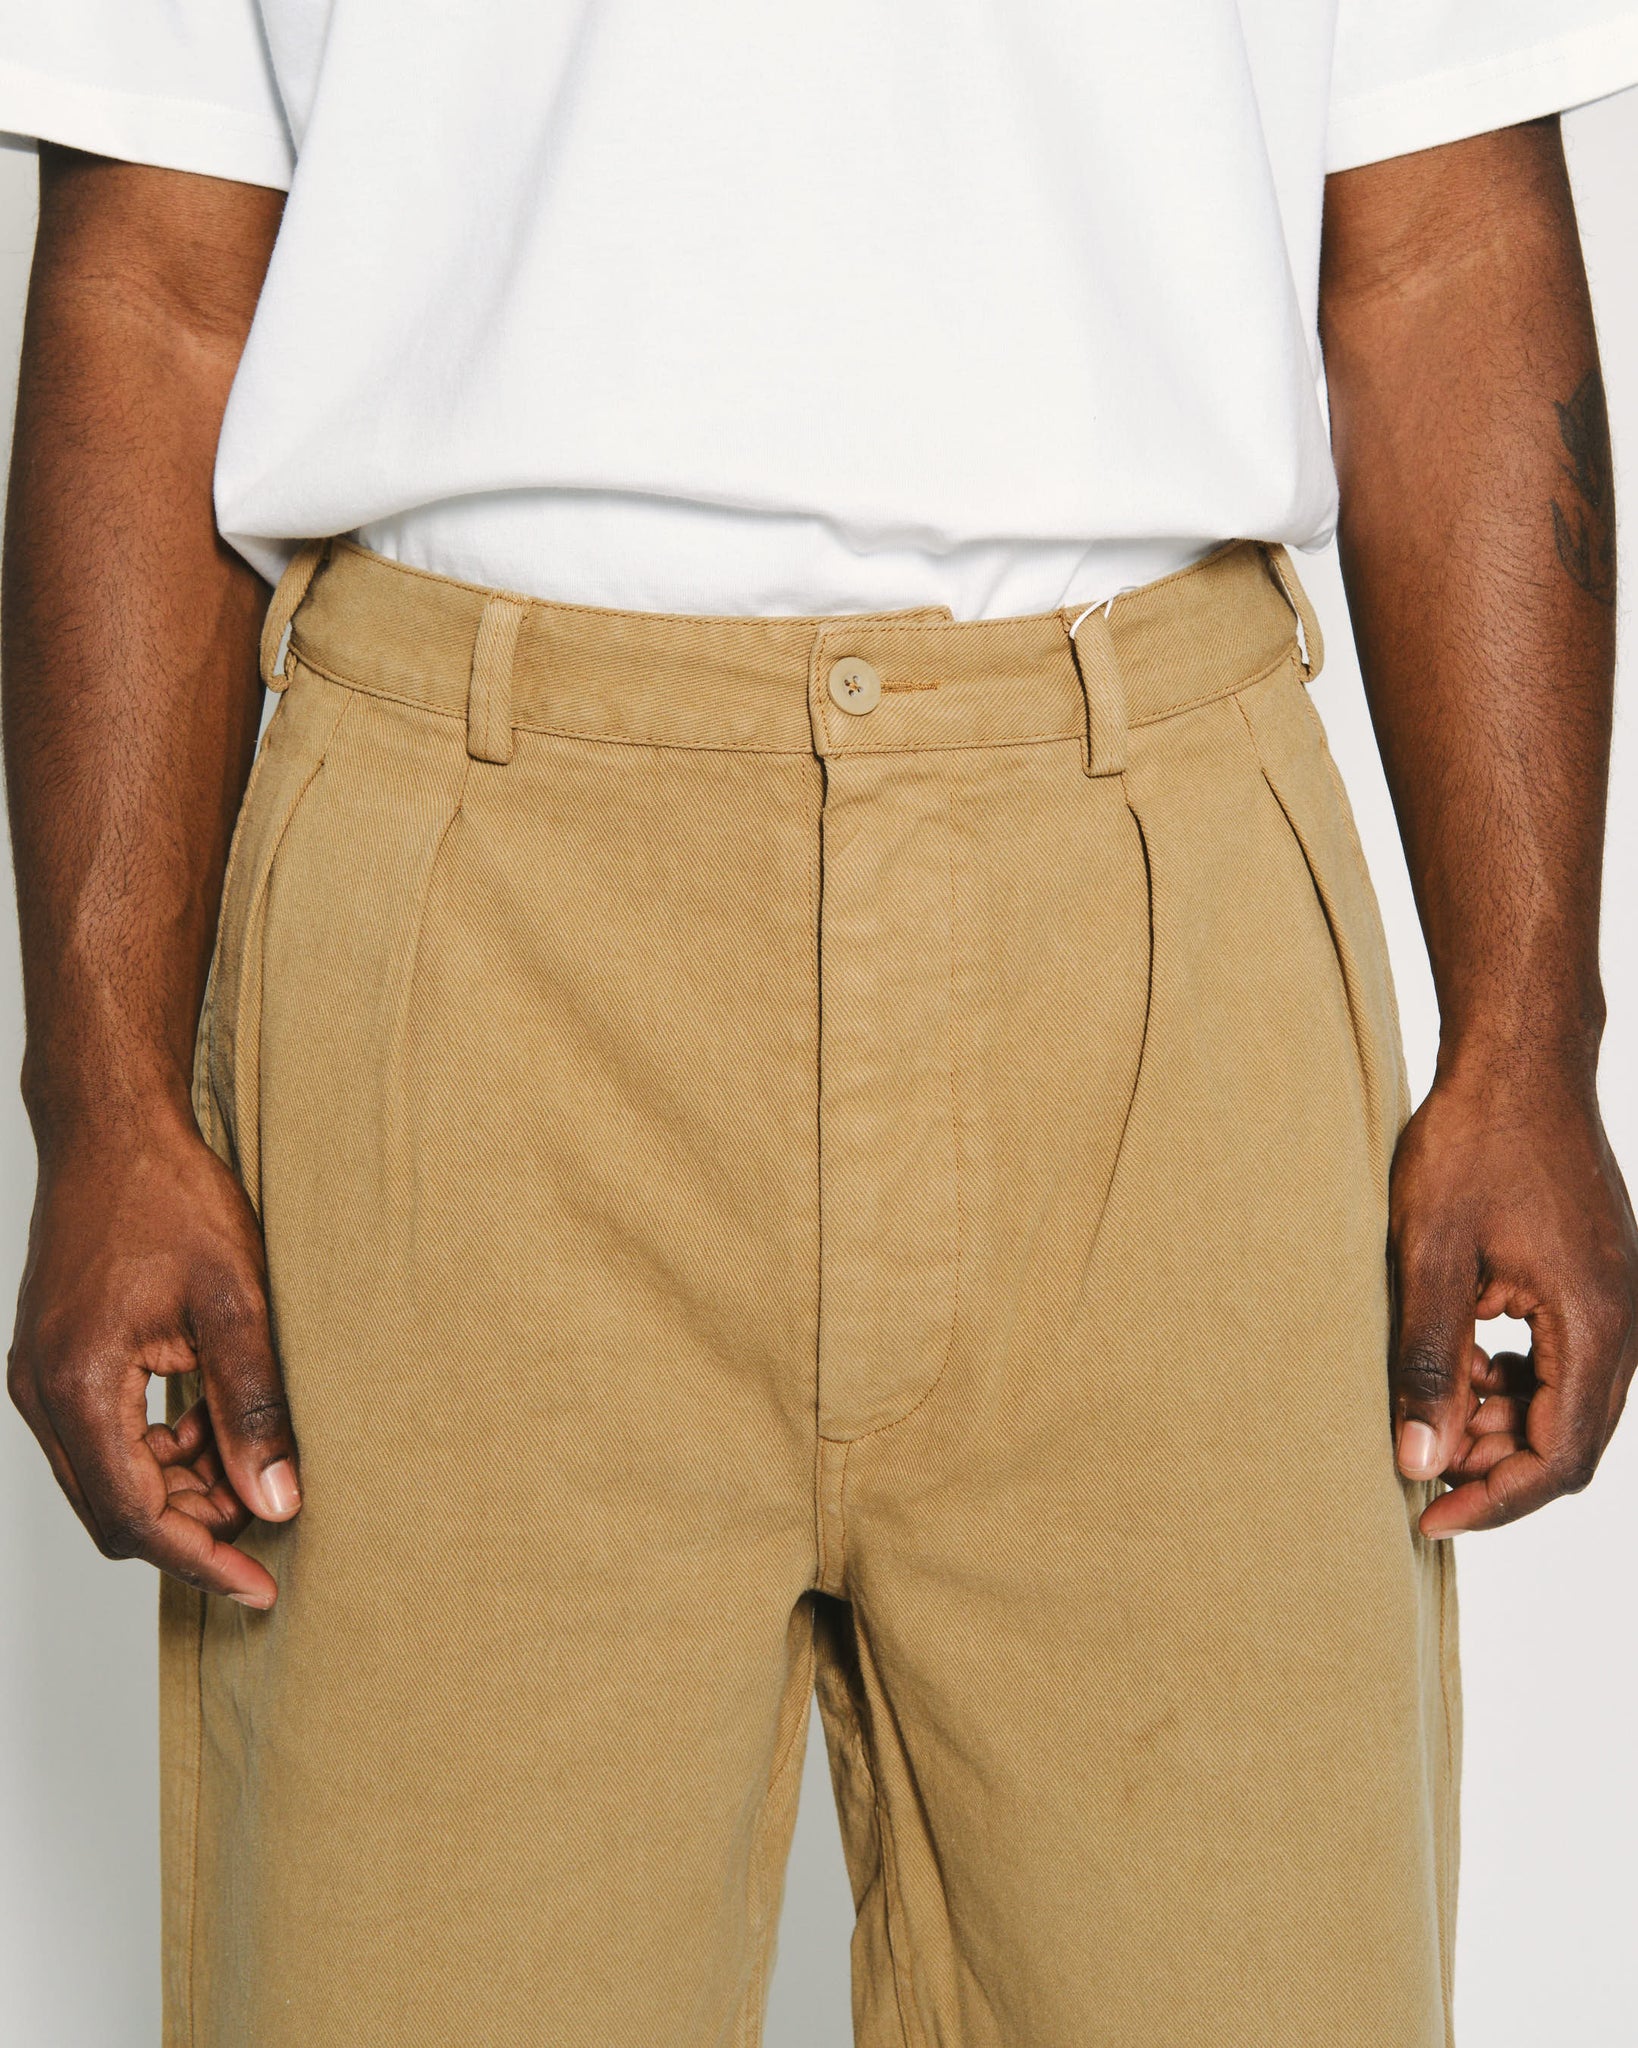 Pleated Shorts - Khaki